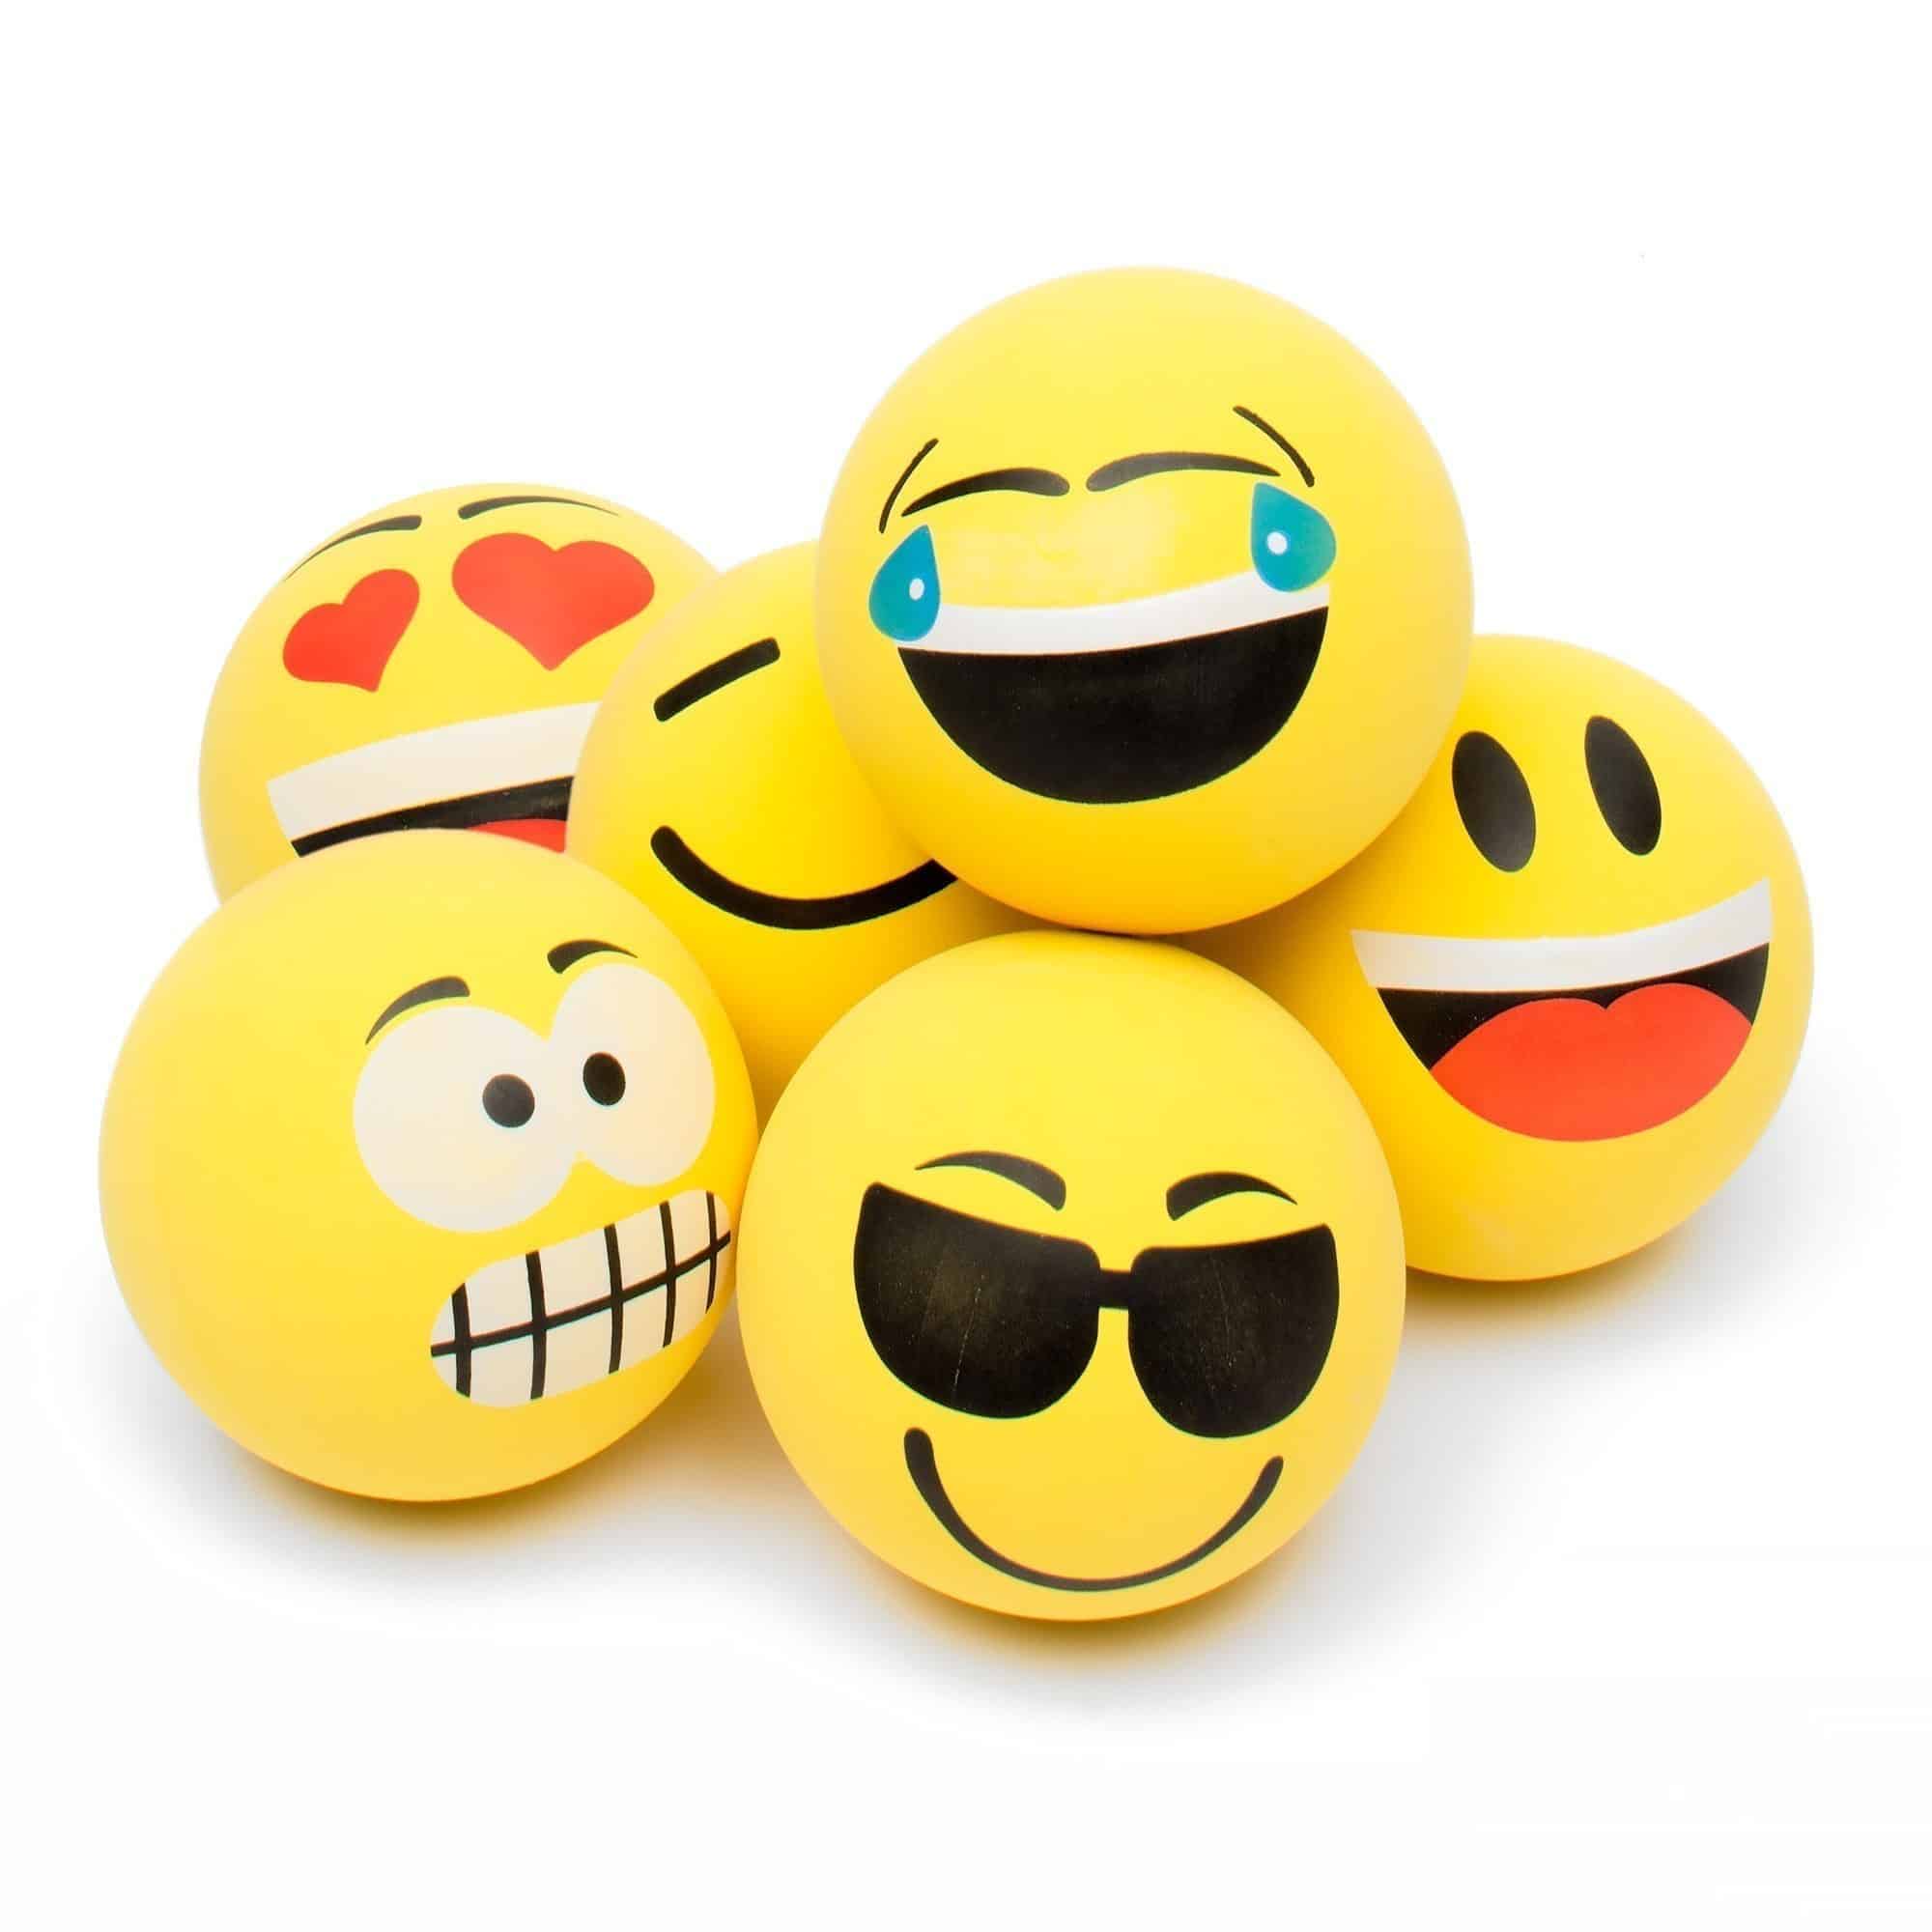 Hi-Bounce Smiley Balls